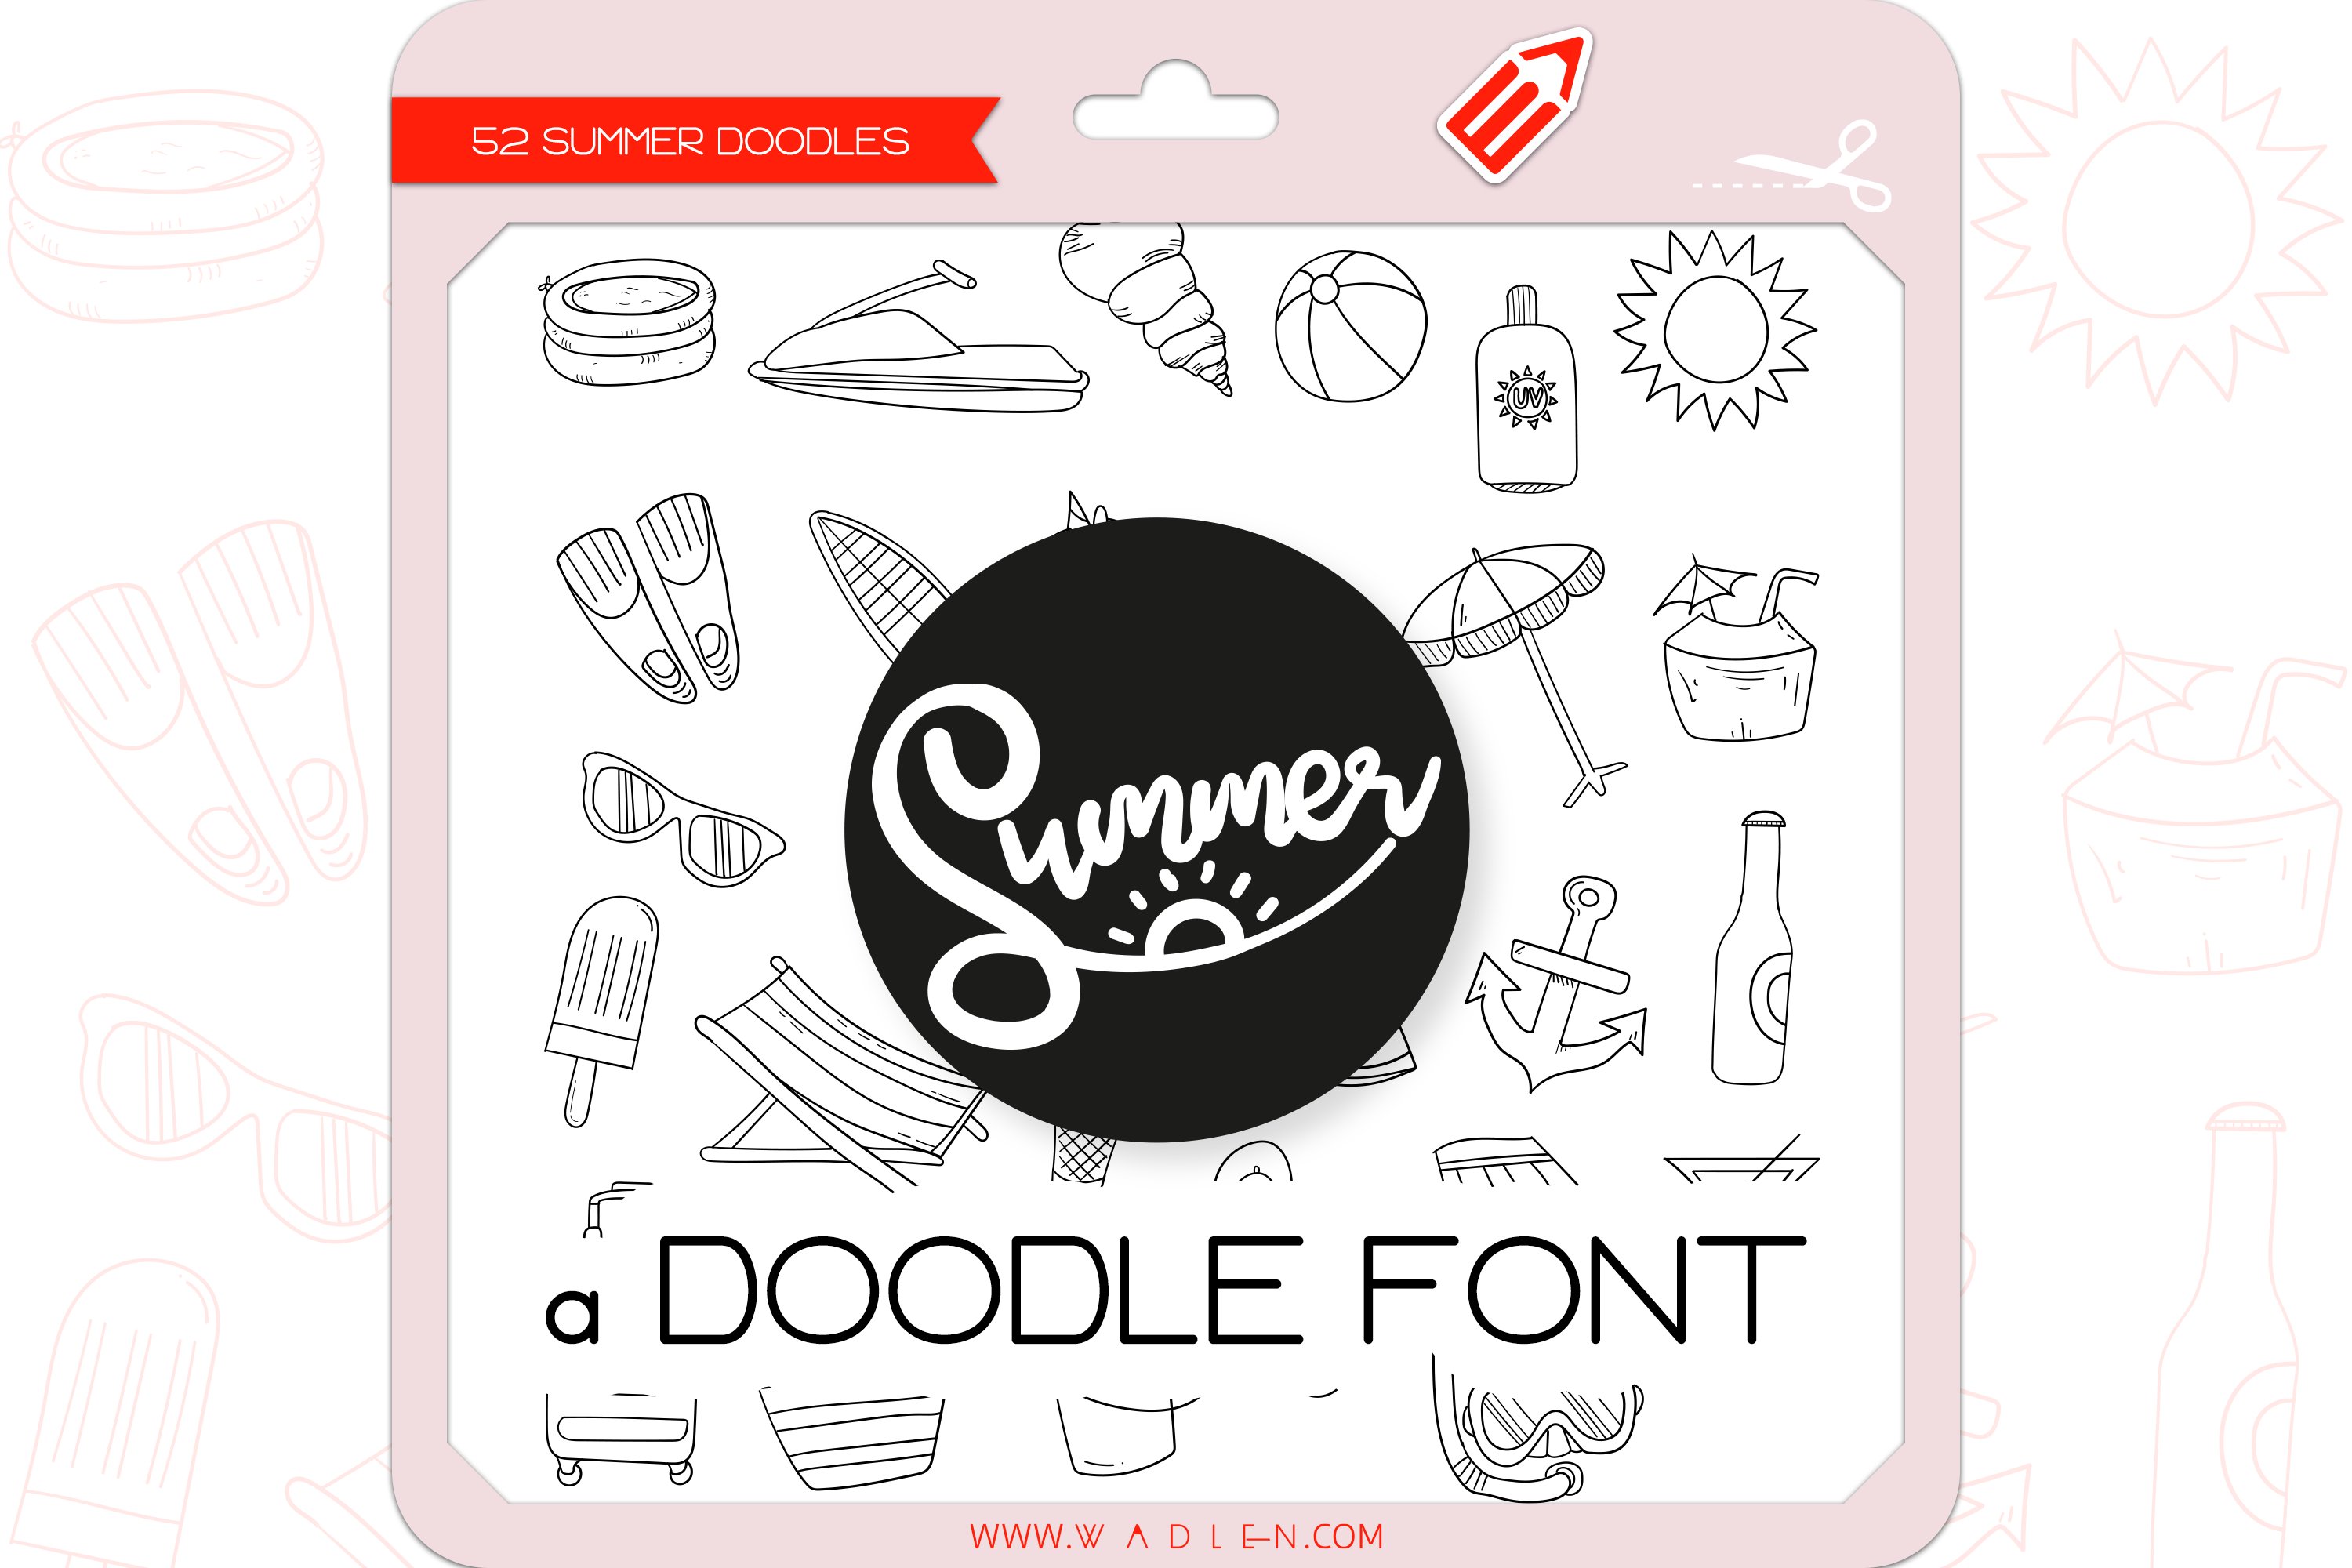 Summer Doodles - Dingbats Font cover image.